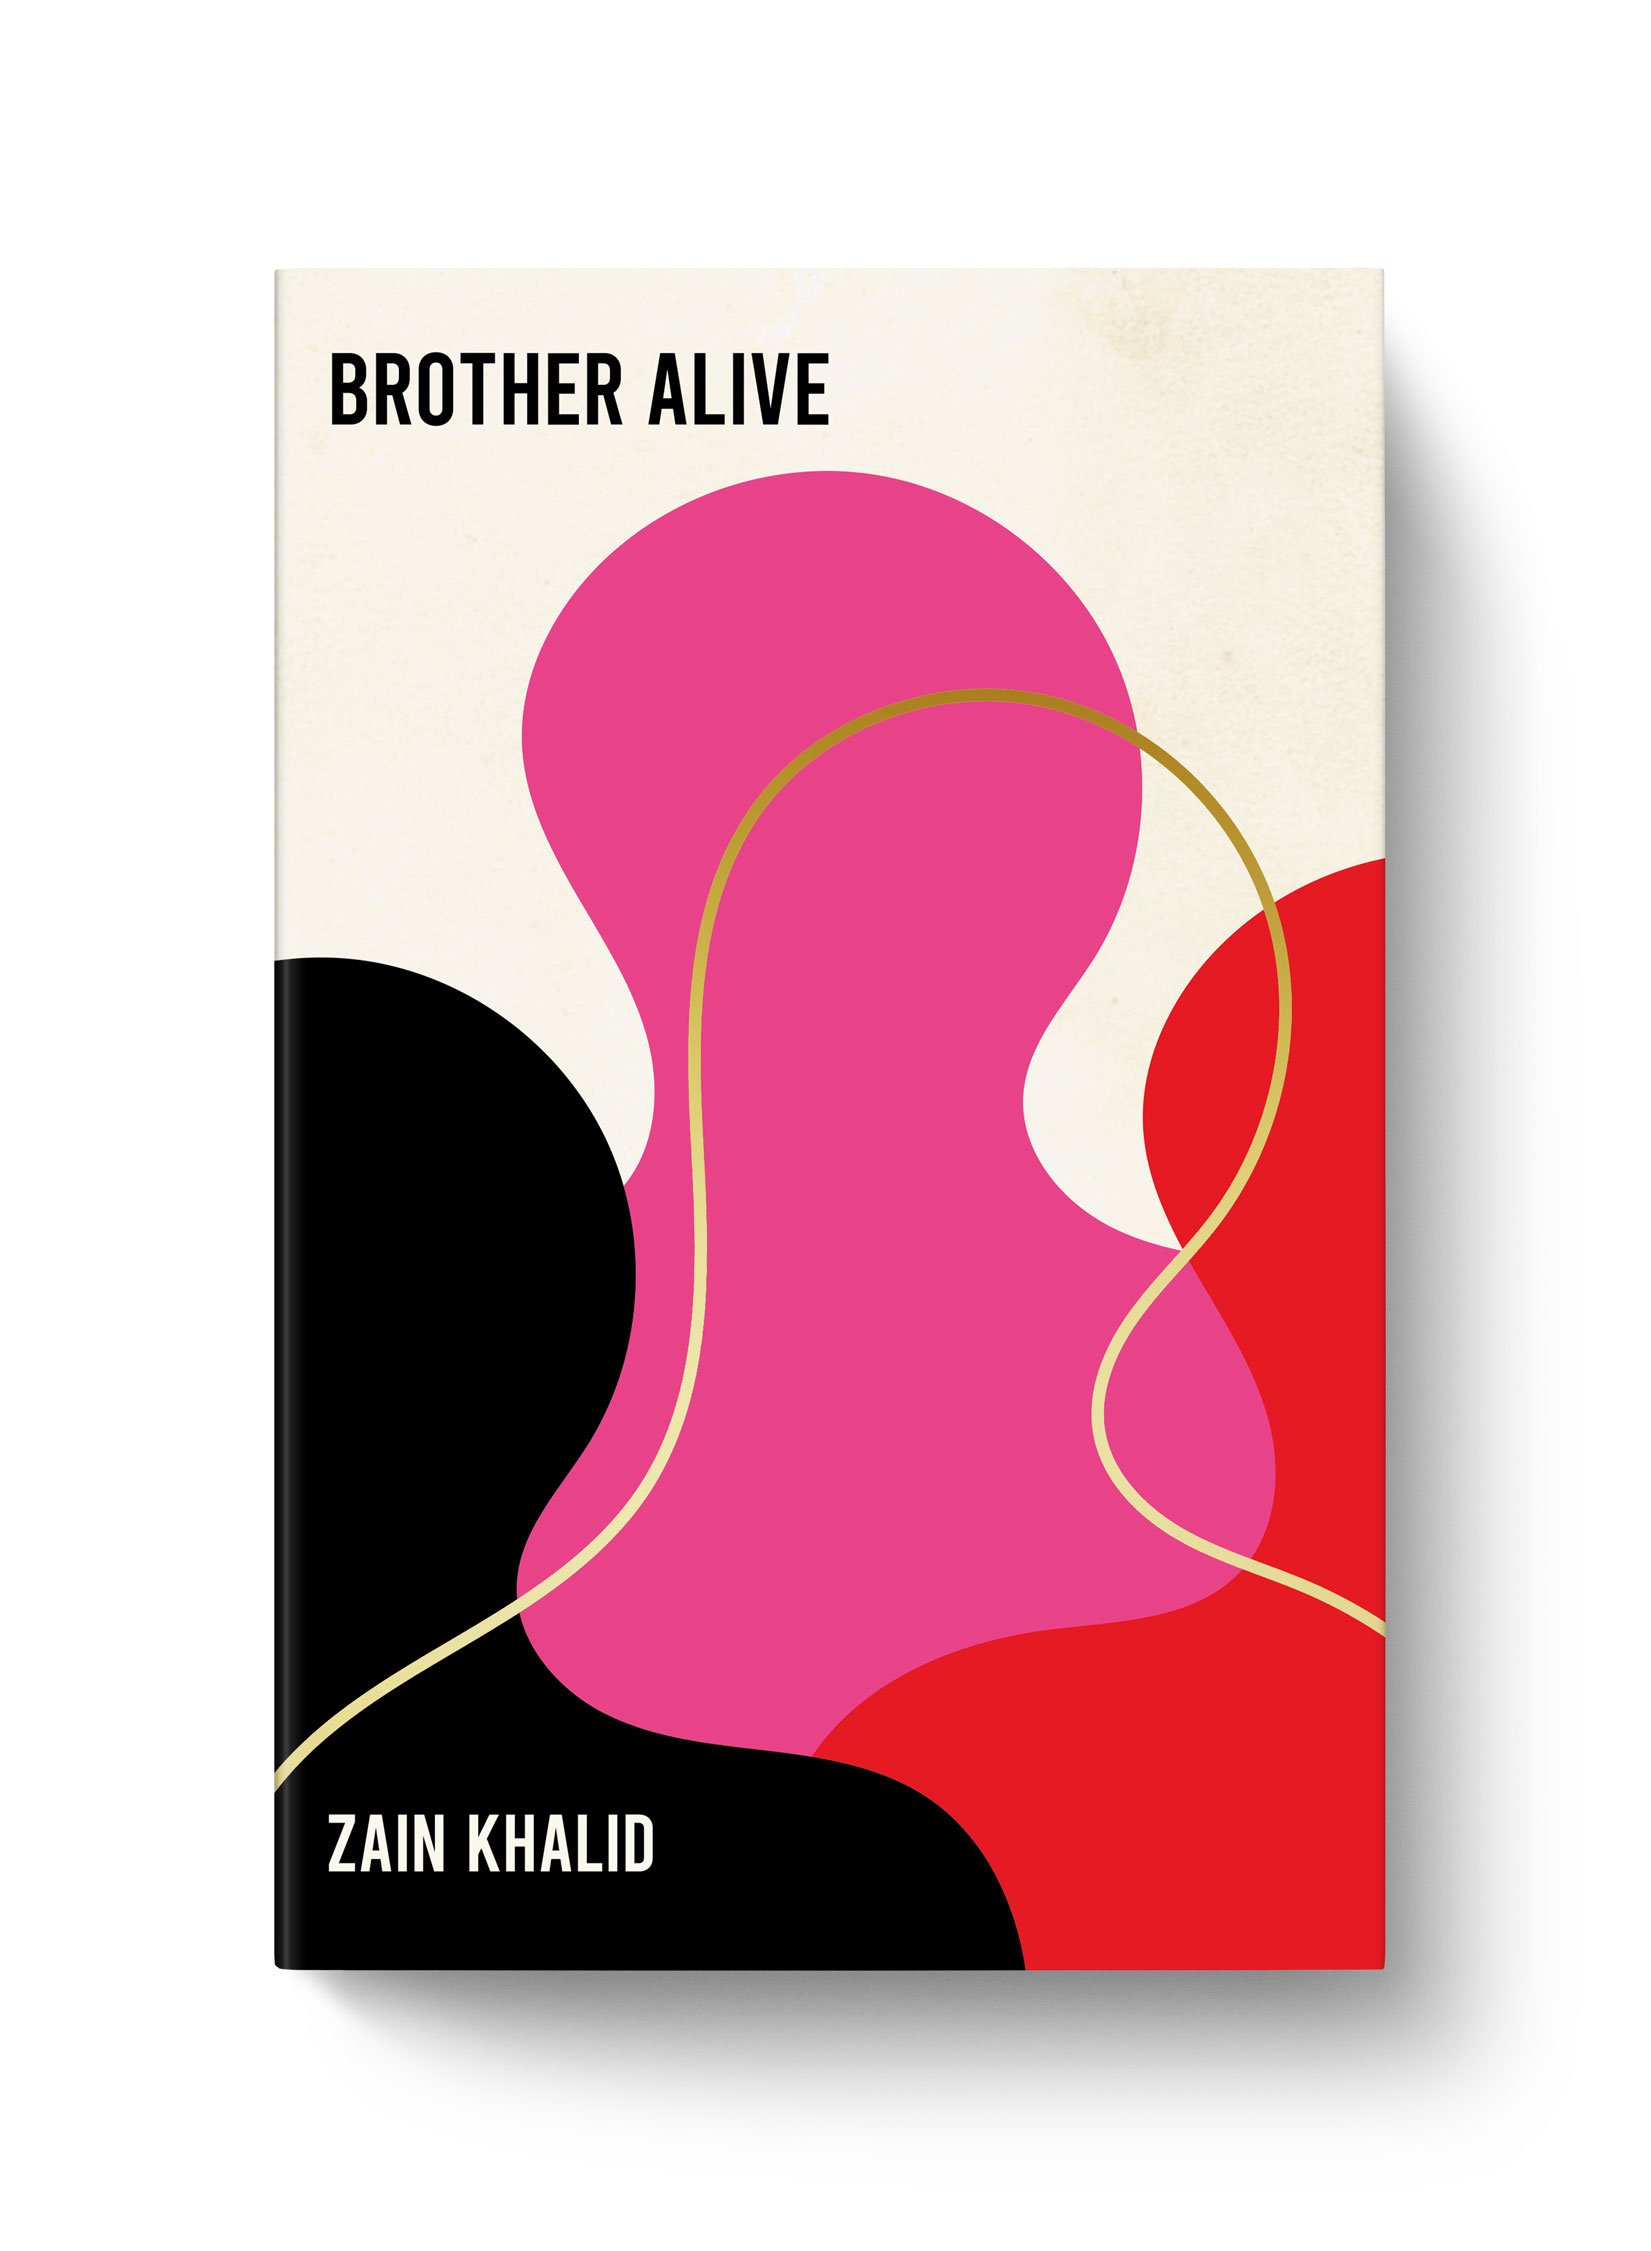   Brother Alive  Zain Khalid  Atlantic 